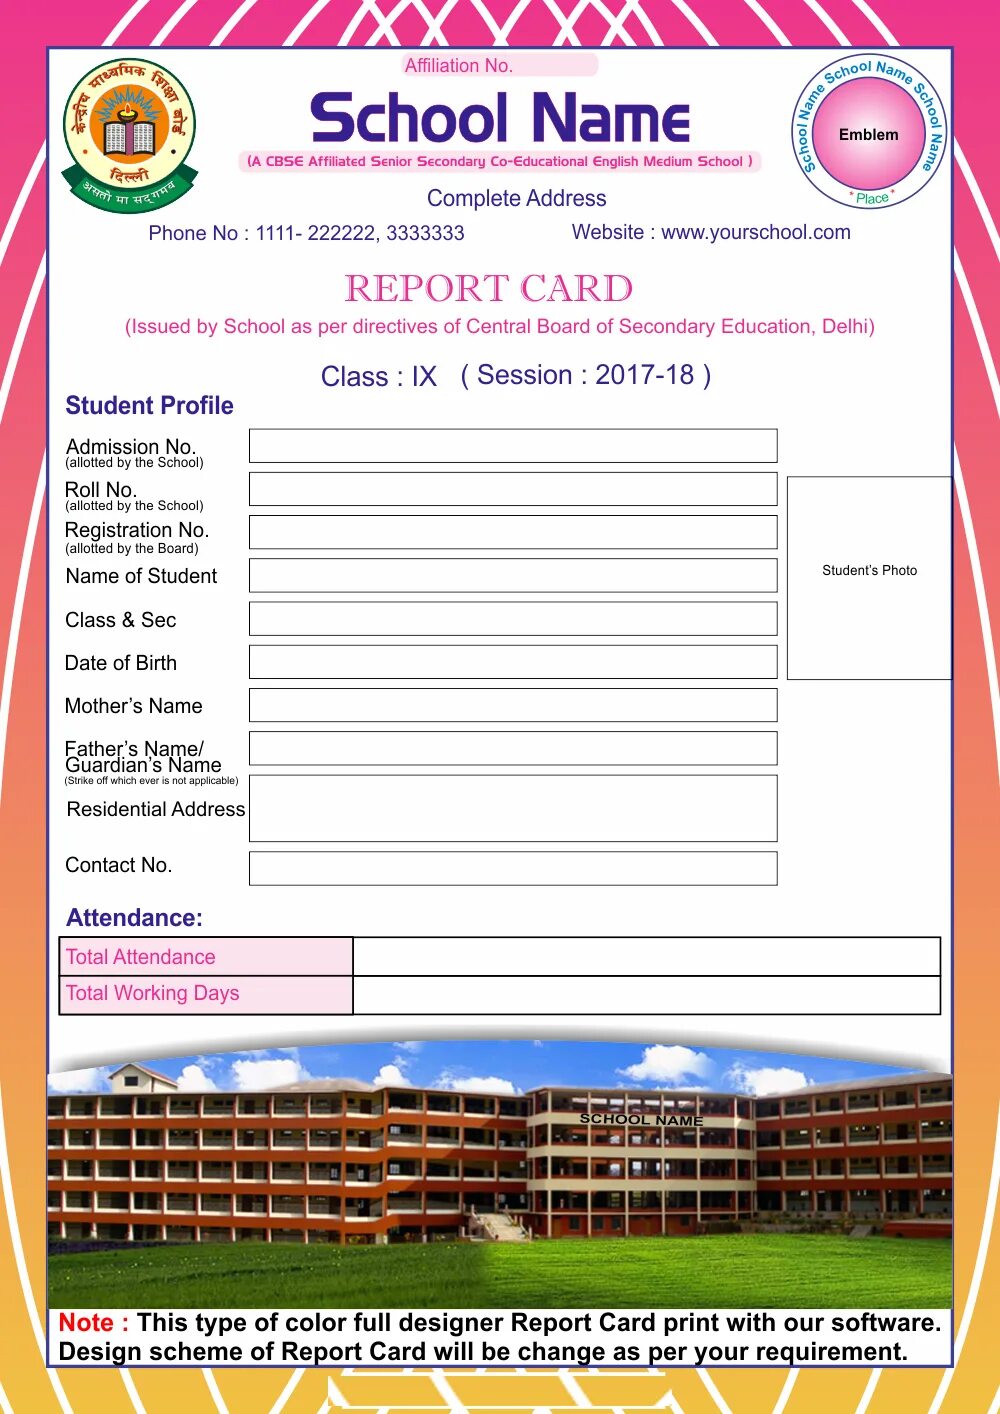 School report. School Report Card. School.Report для английской школы. What is School Report. Report Card secondary School.